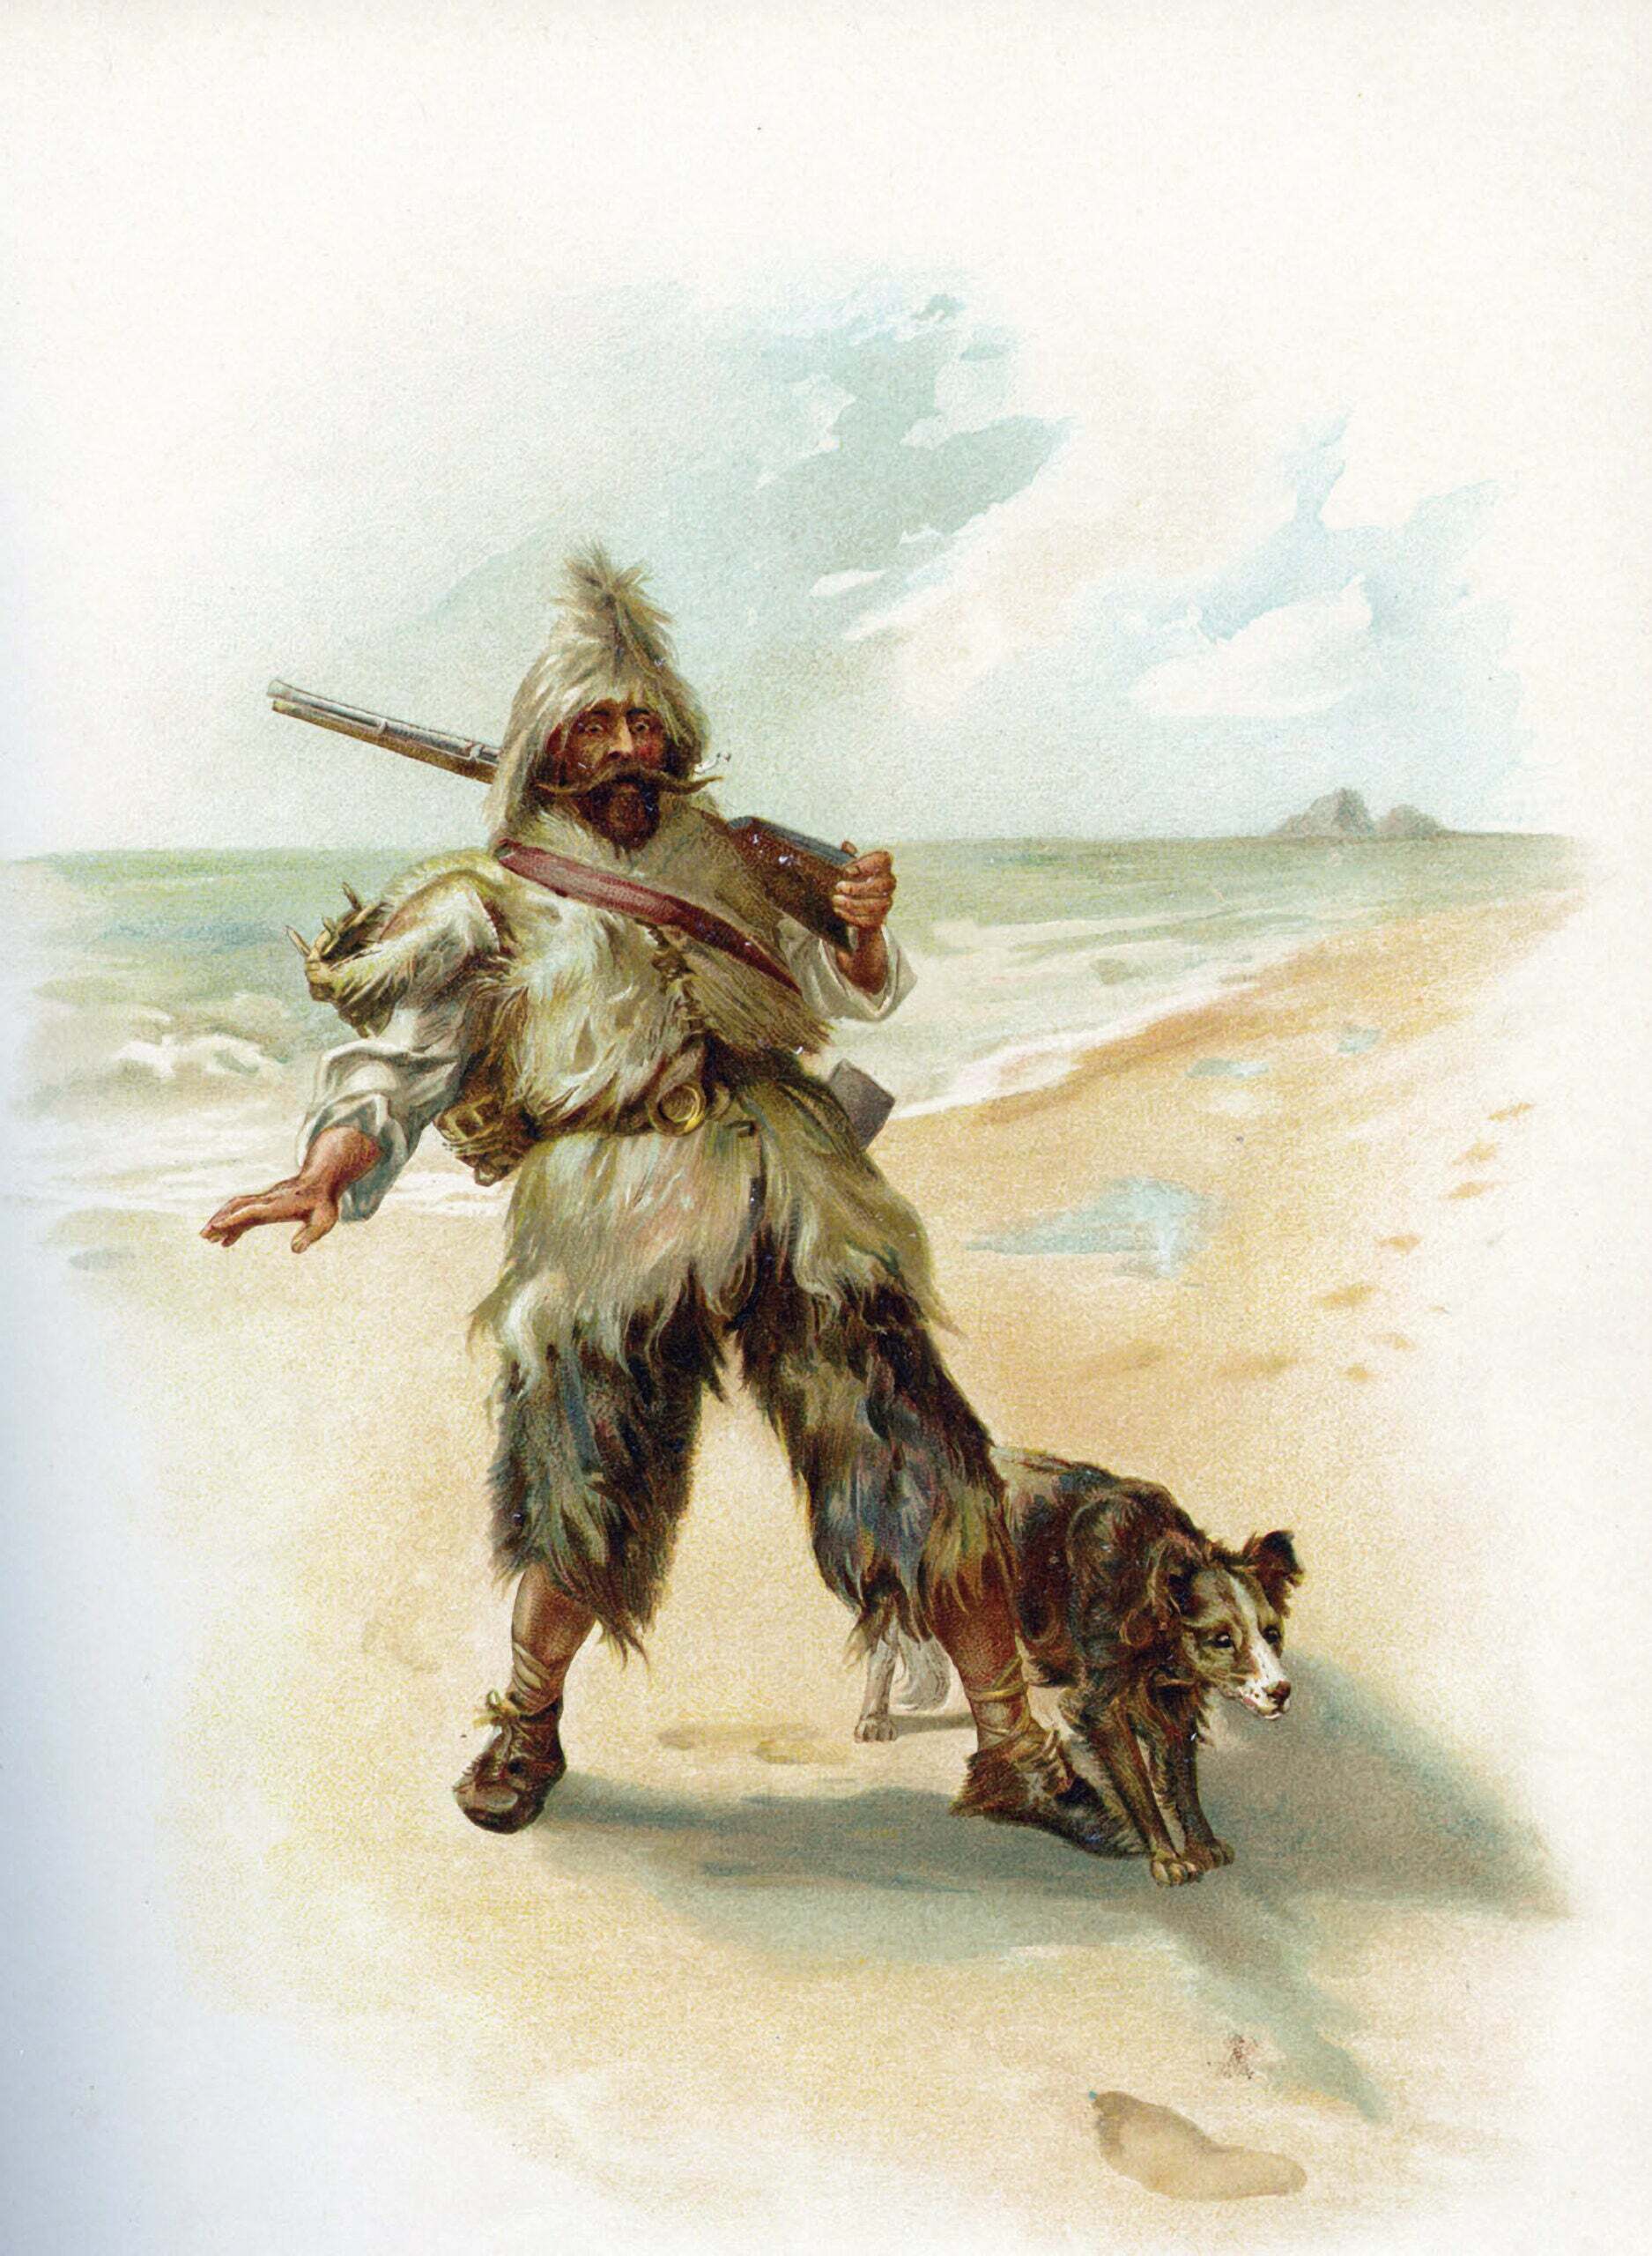 Discussion Questions: Robinson Crusoe by Daniel Defoe